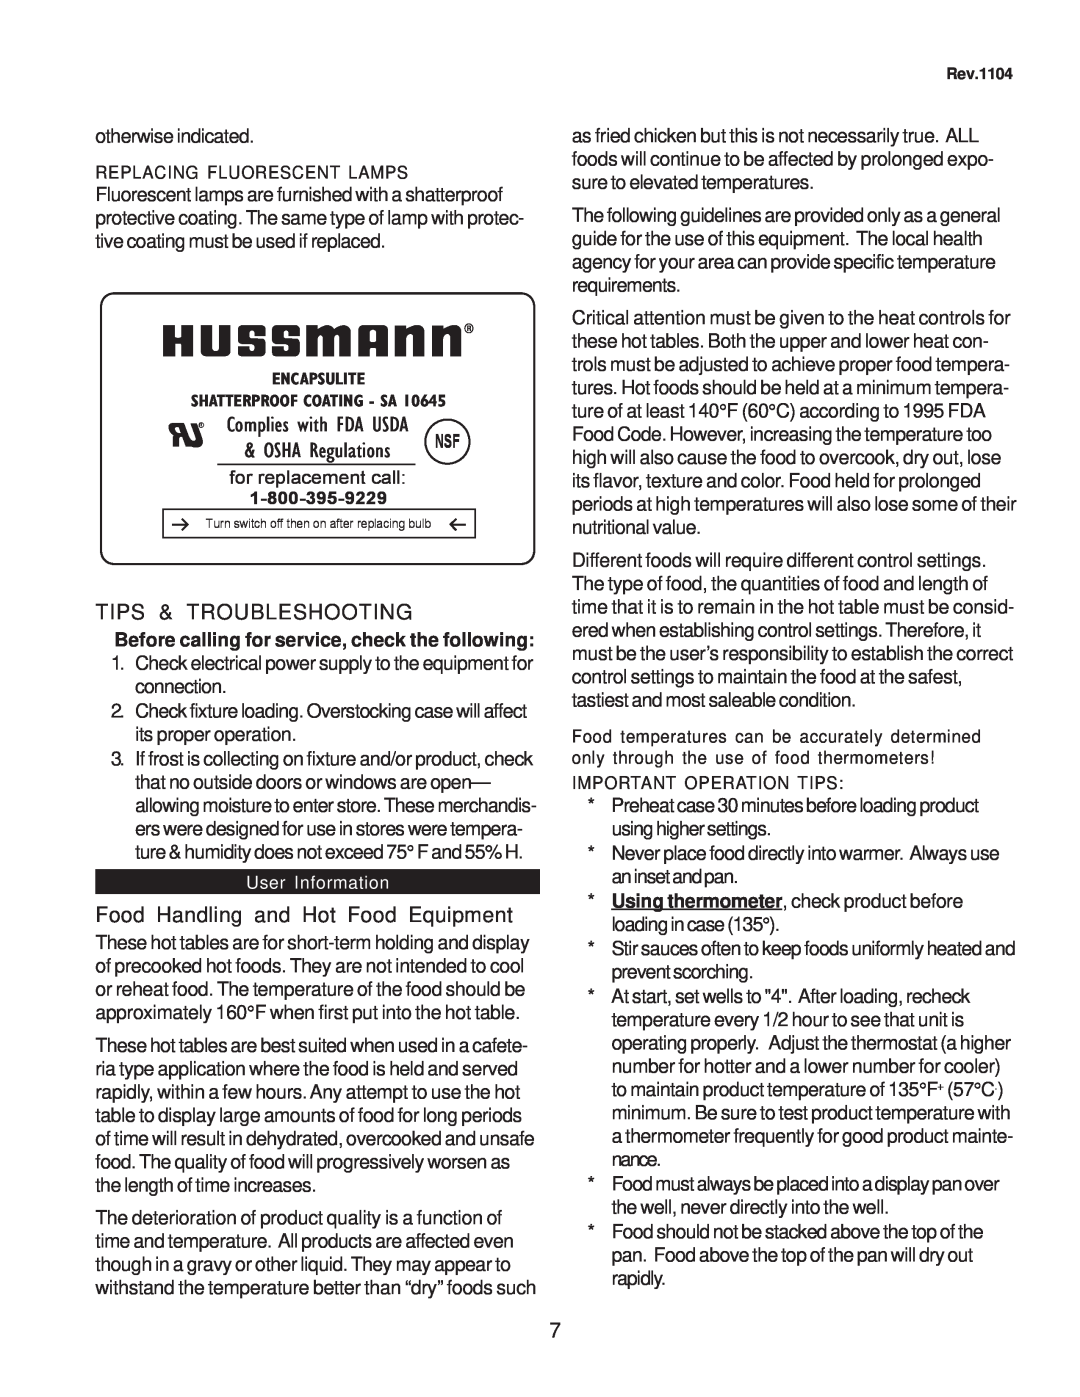 hussman CR3HTO-HTB operation manual Tips & Troubleshooting, Food Handling and Hot Food Equipment 